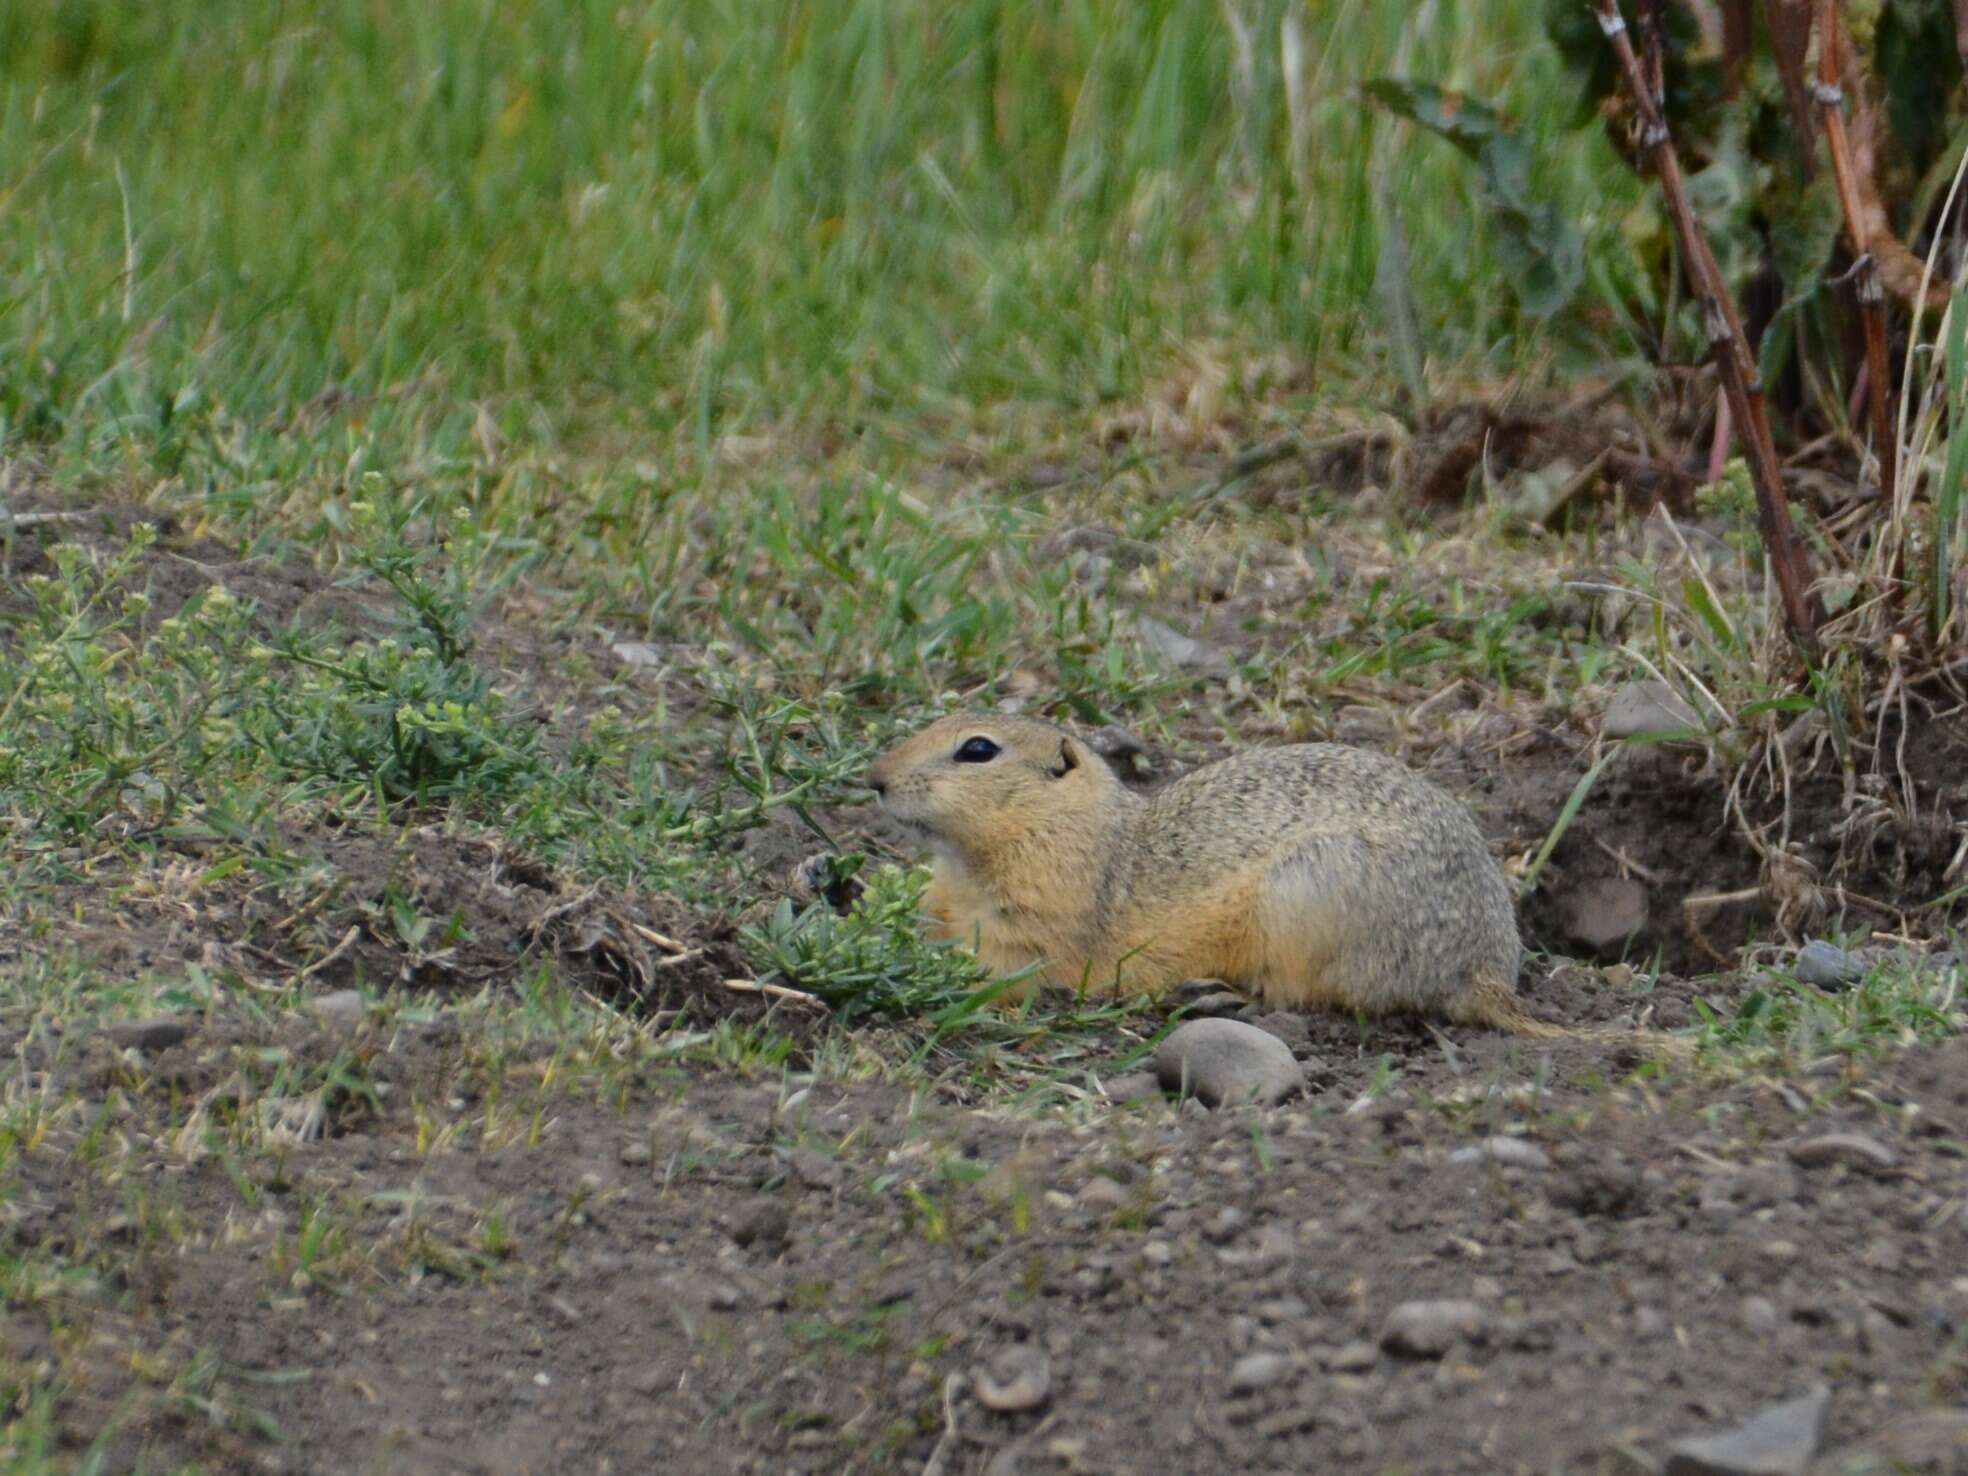 Image of Richardson's ground squirrel